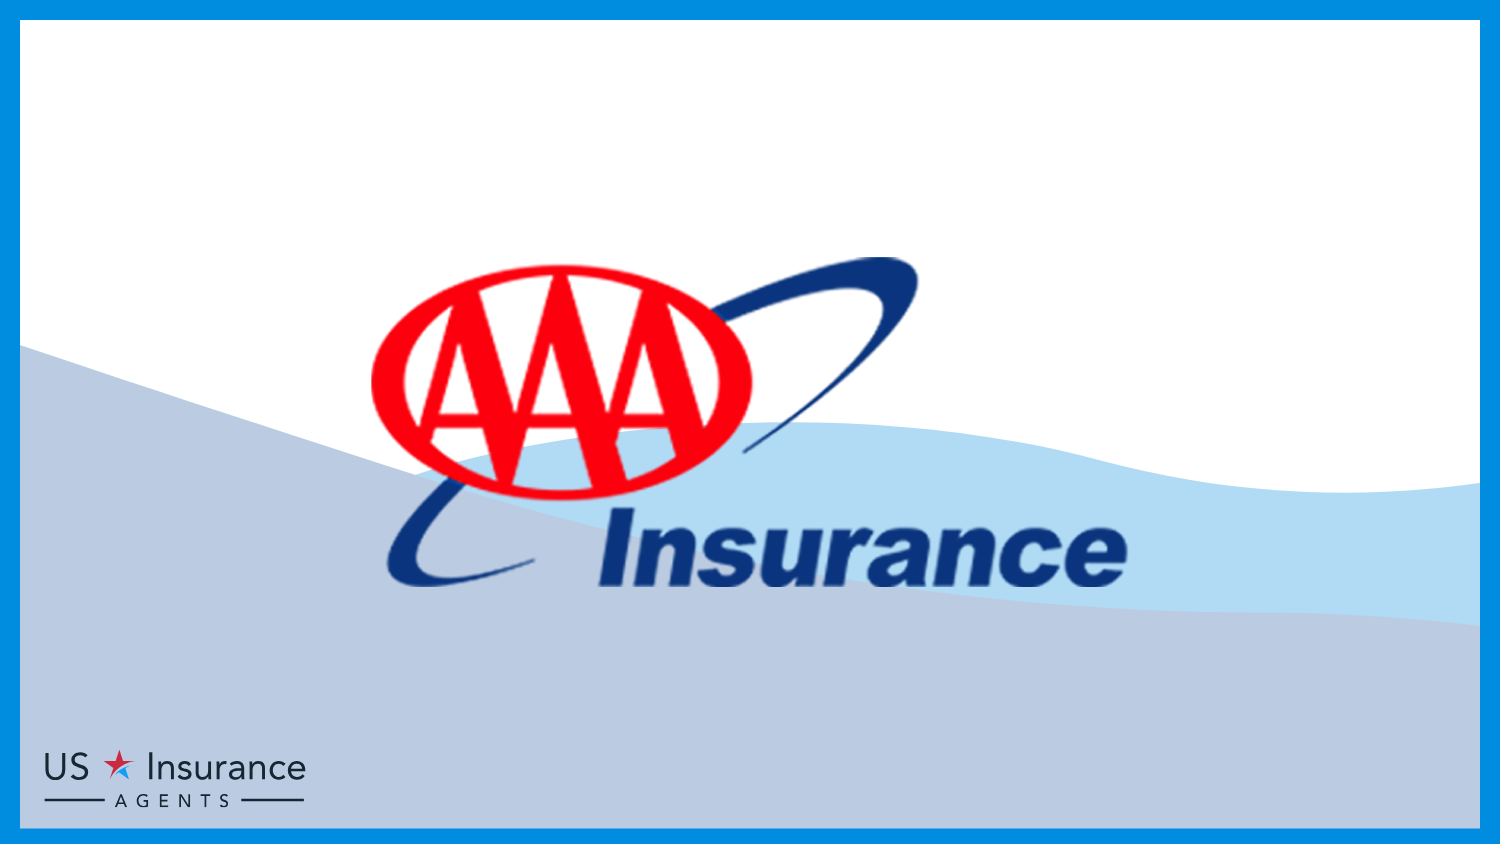 AAA Insurance: Best Business Insurance for Bodyguards